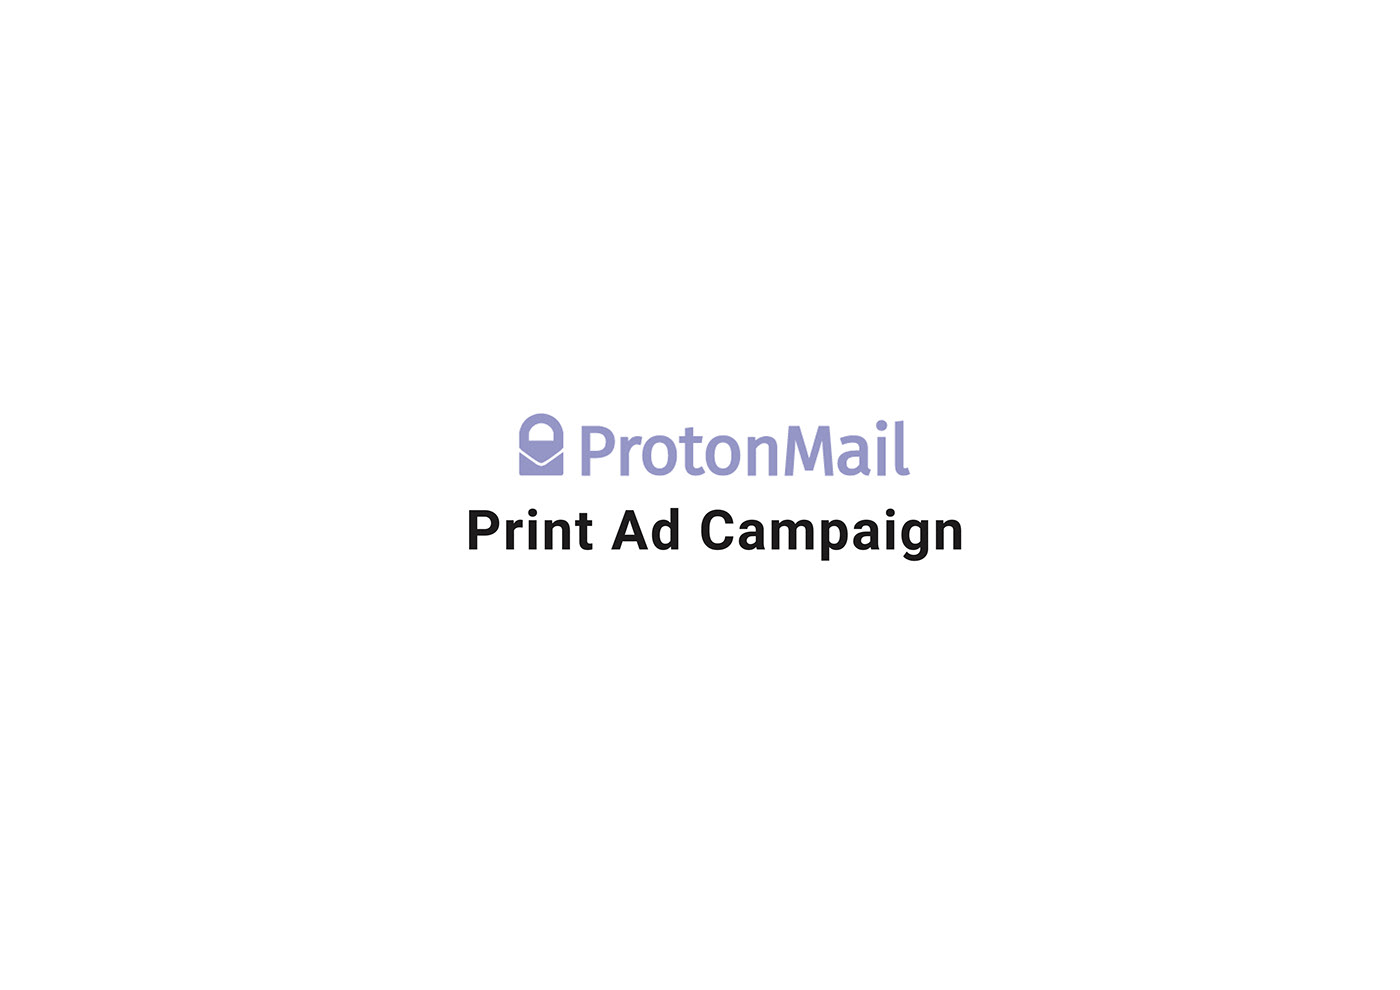 Big Brother copy ad matrix print ad privacy ProtonMail Right to Privacy snowden